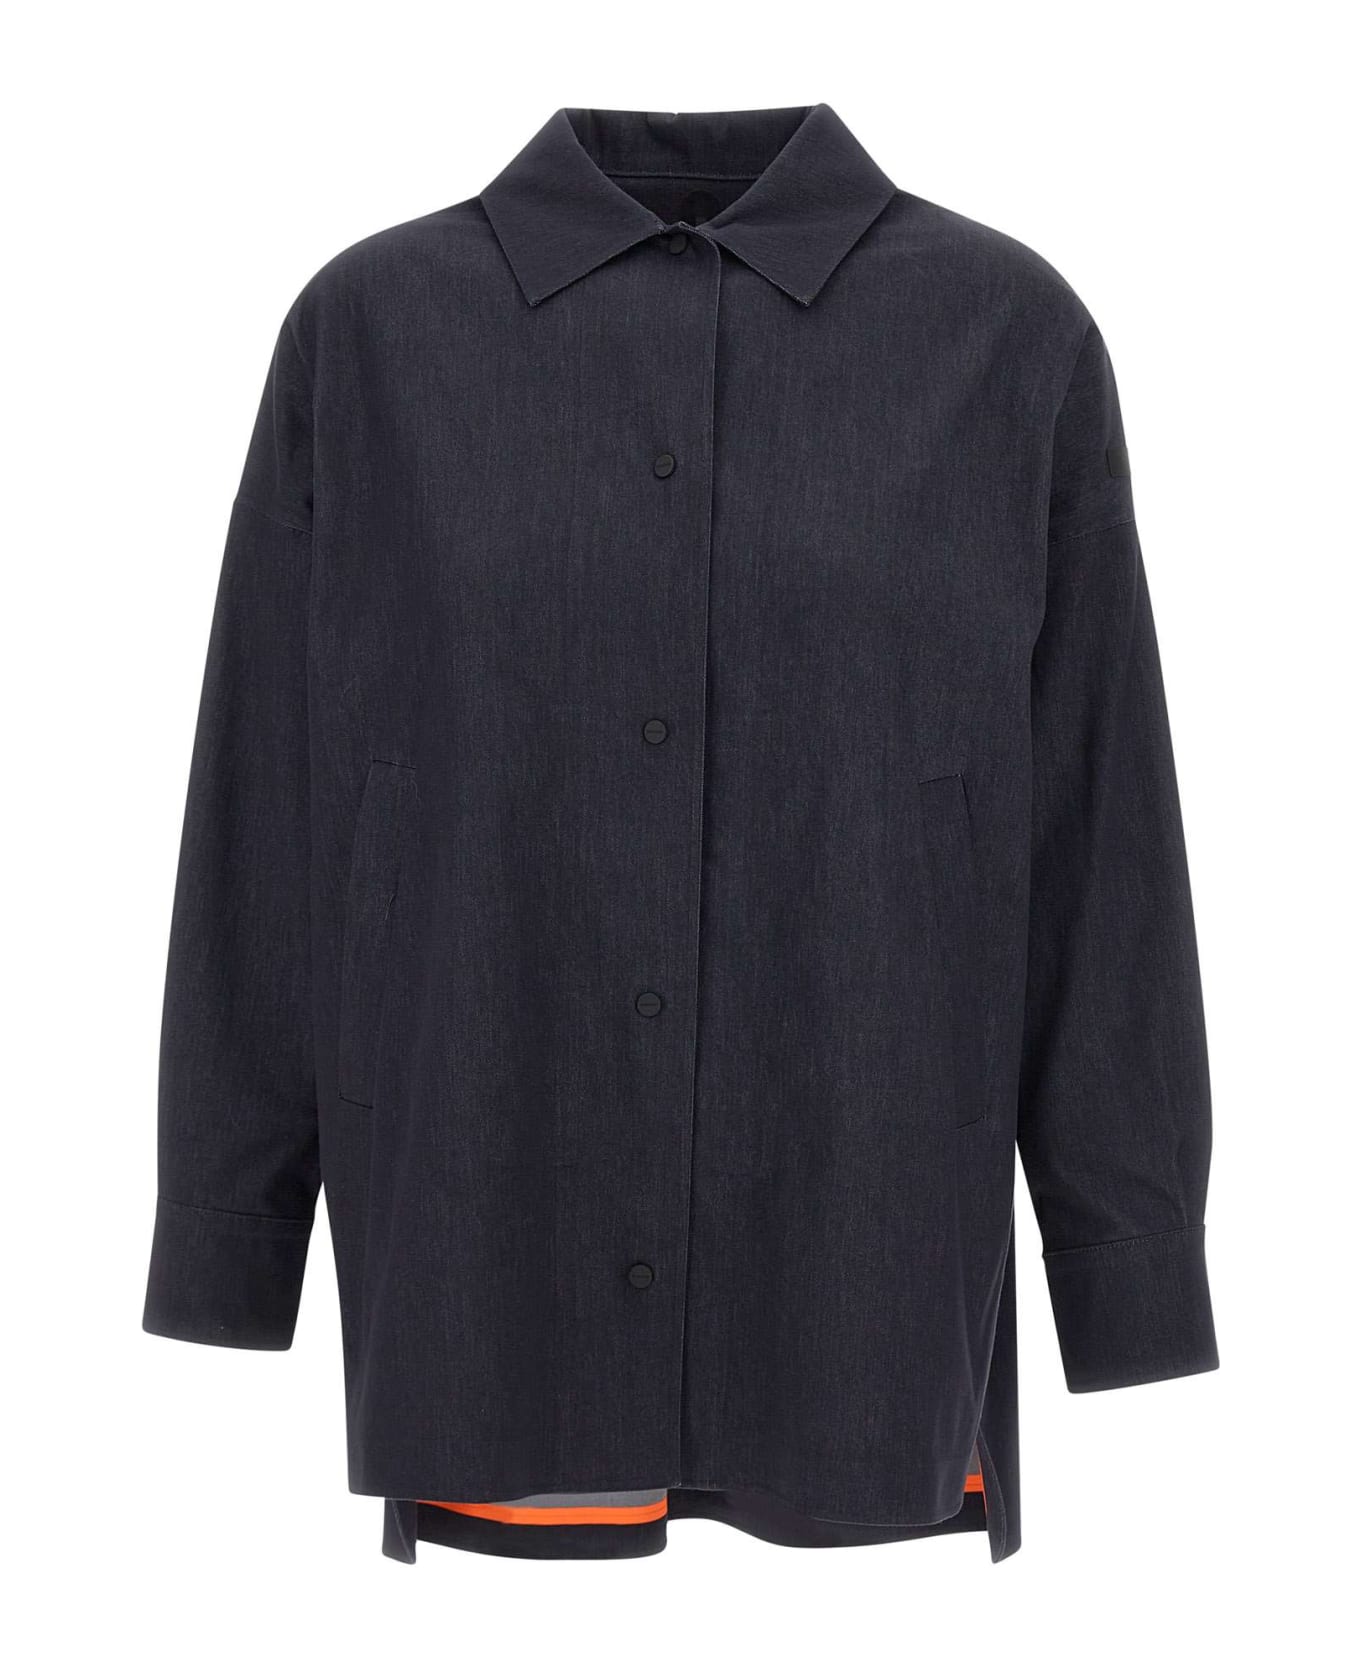 RRD - Roberto Ricci Design 'marina Overshirt ' Jacket - Blue Black シャツ